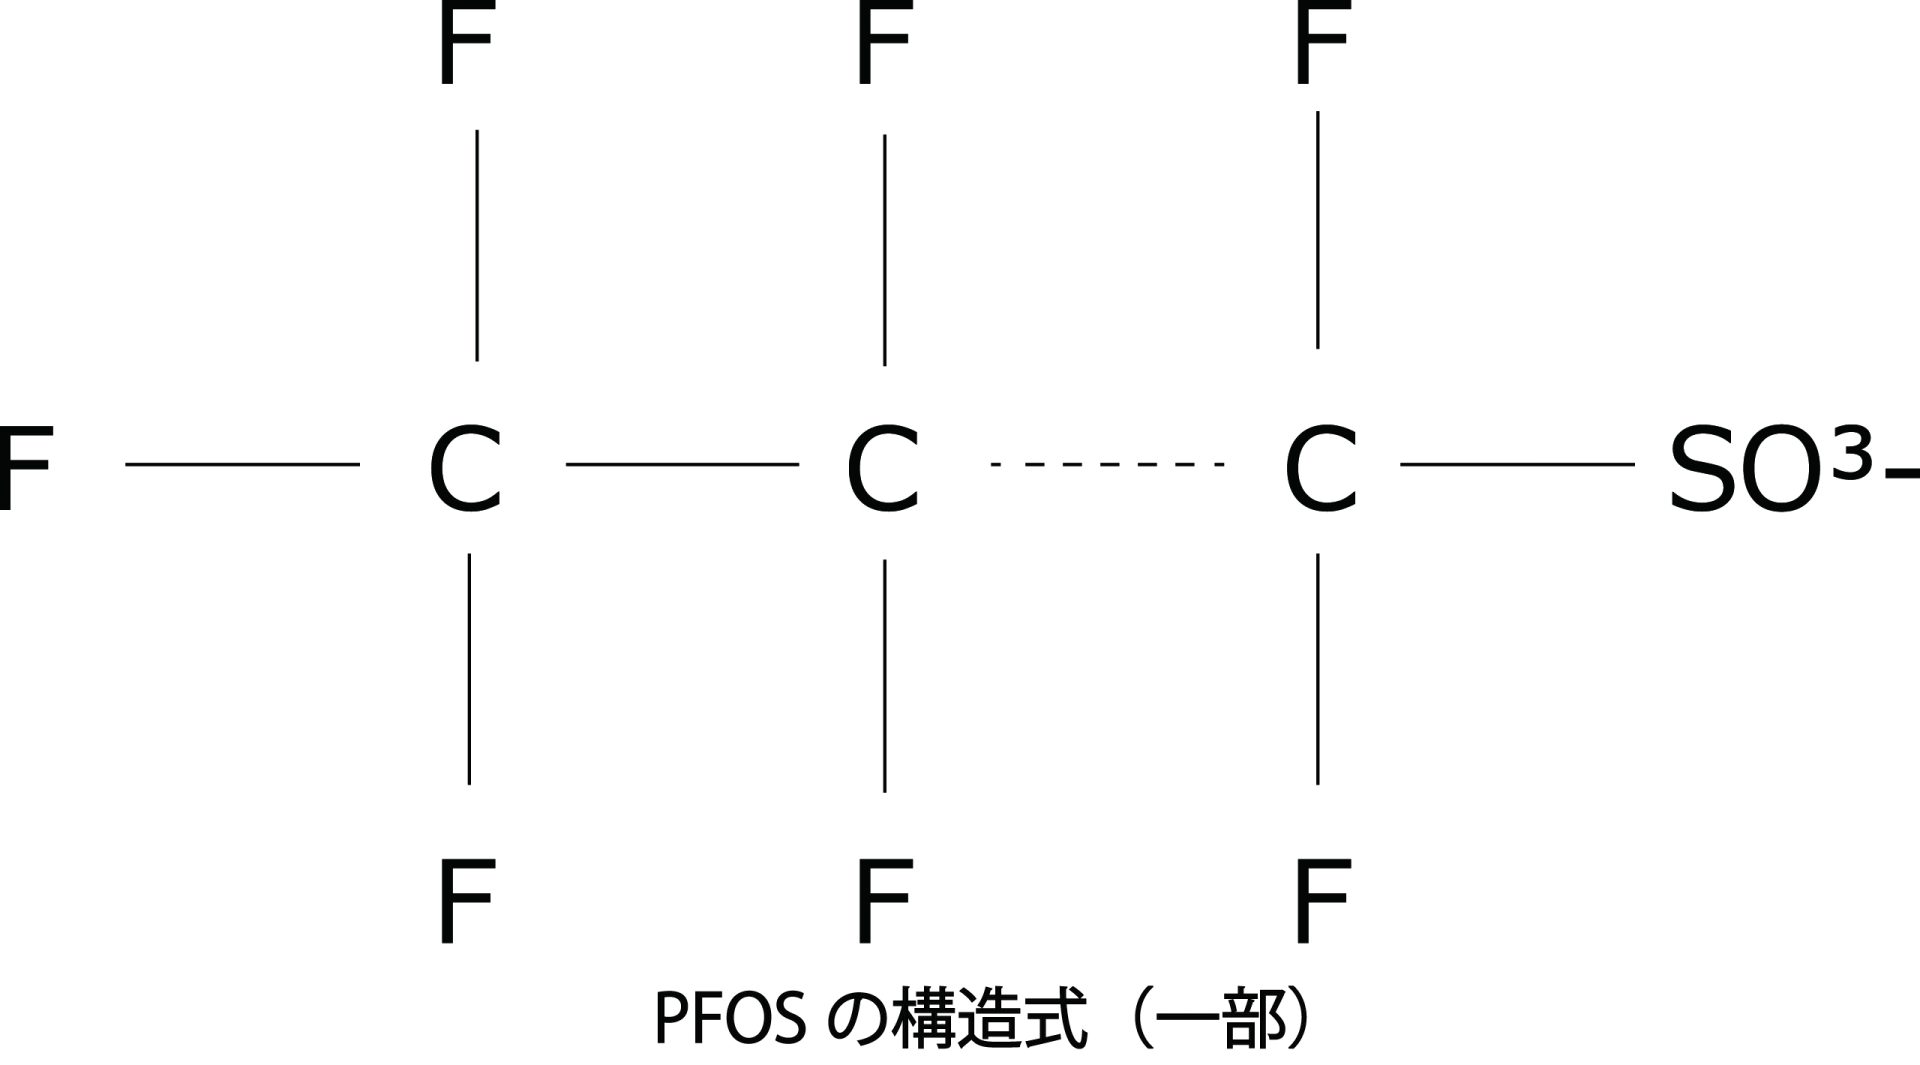 PFOSの構造式